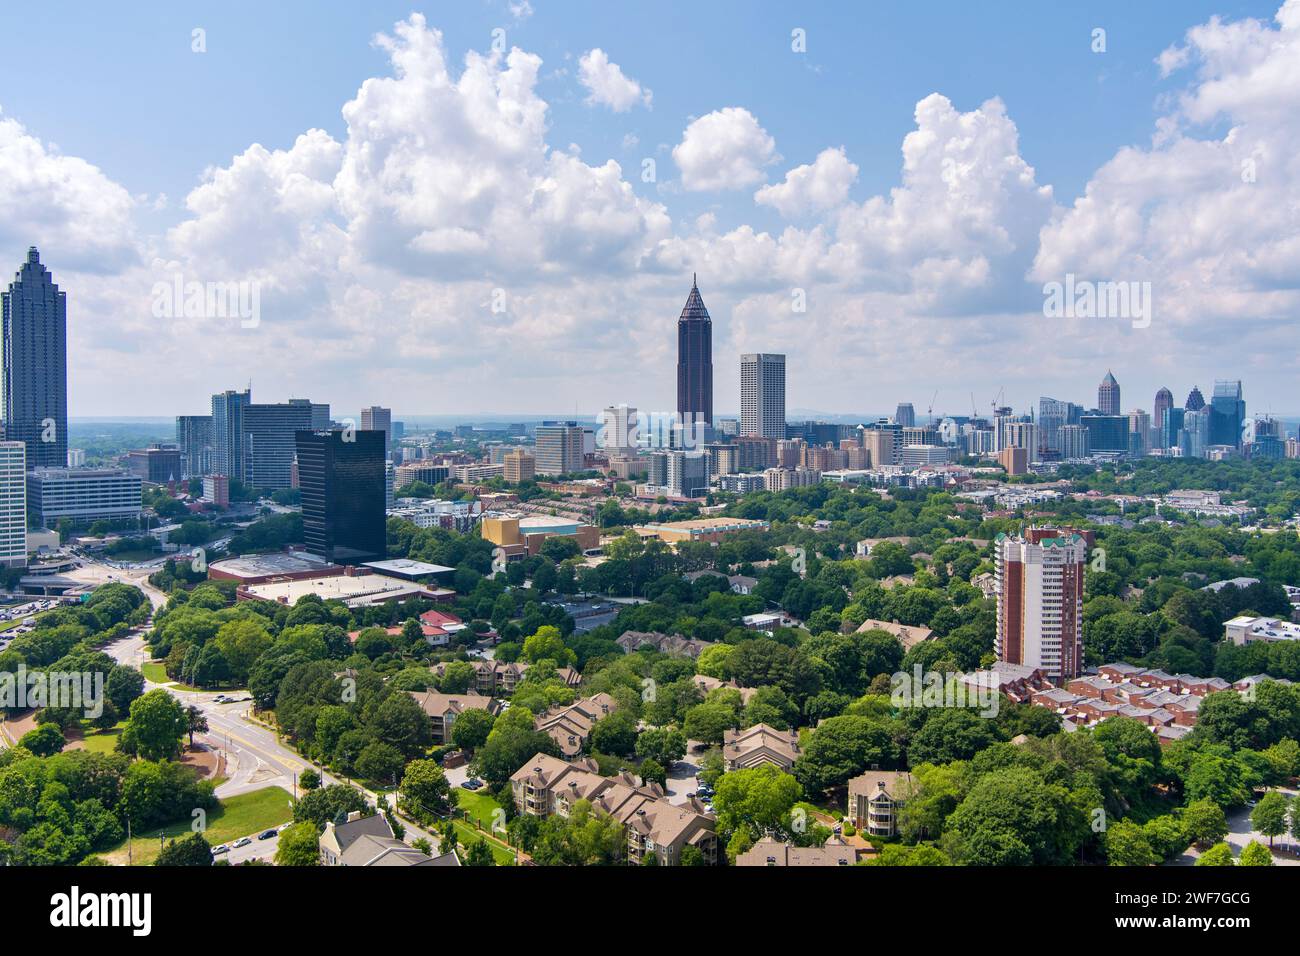 The Atlanta, Georgia skyline from above the Jackson St Bridge Stock Photo